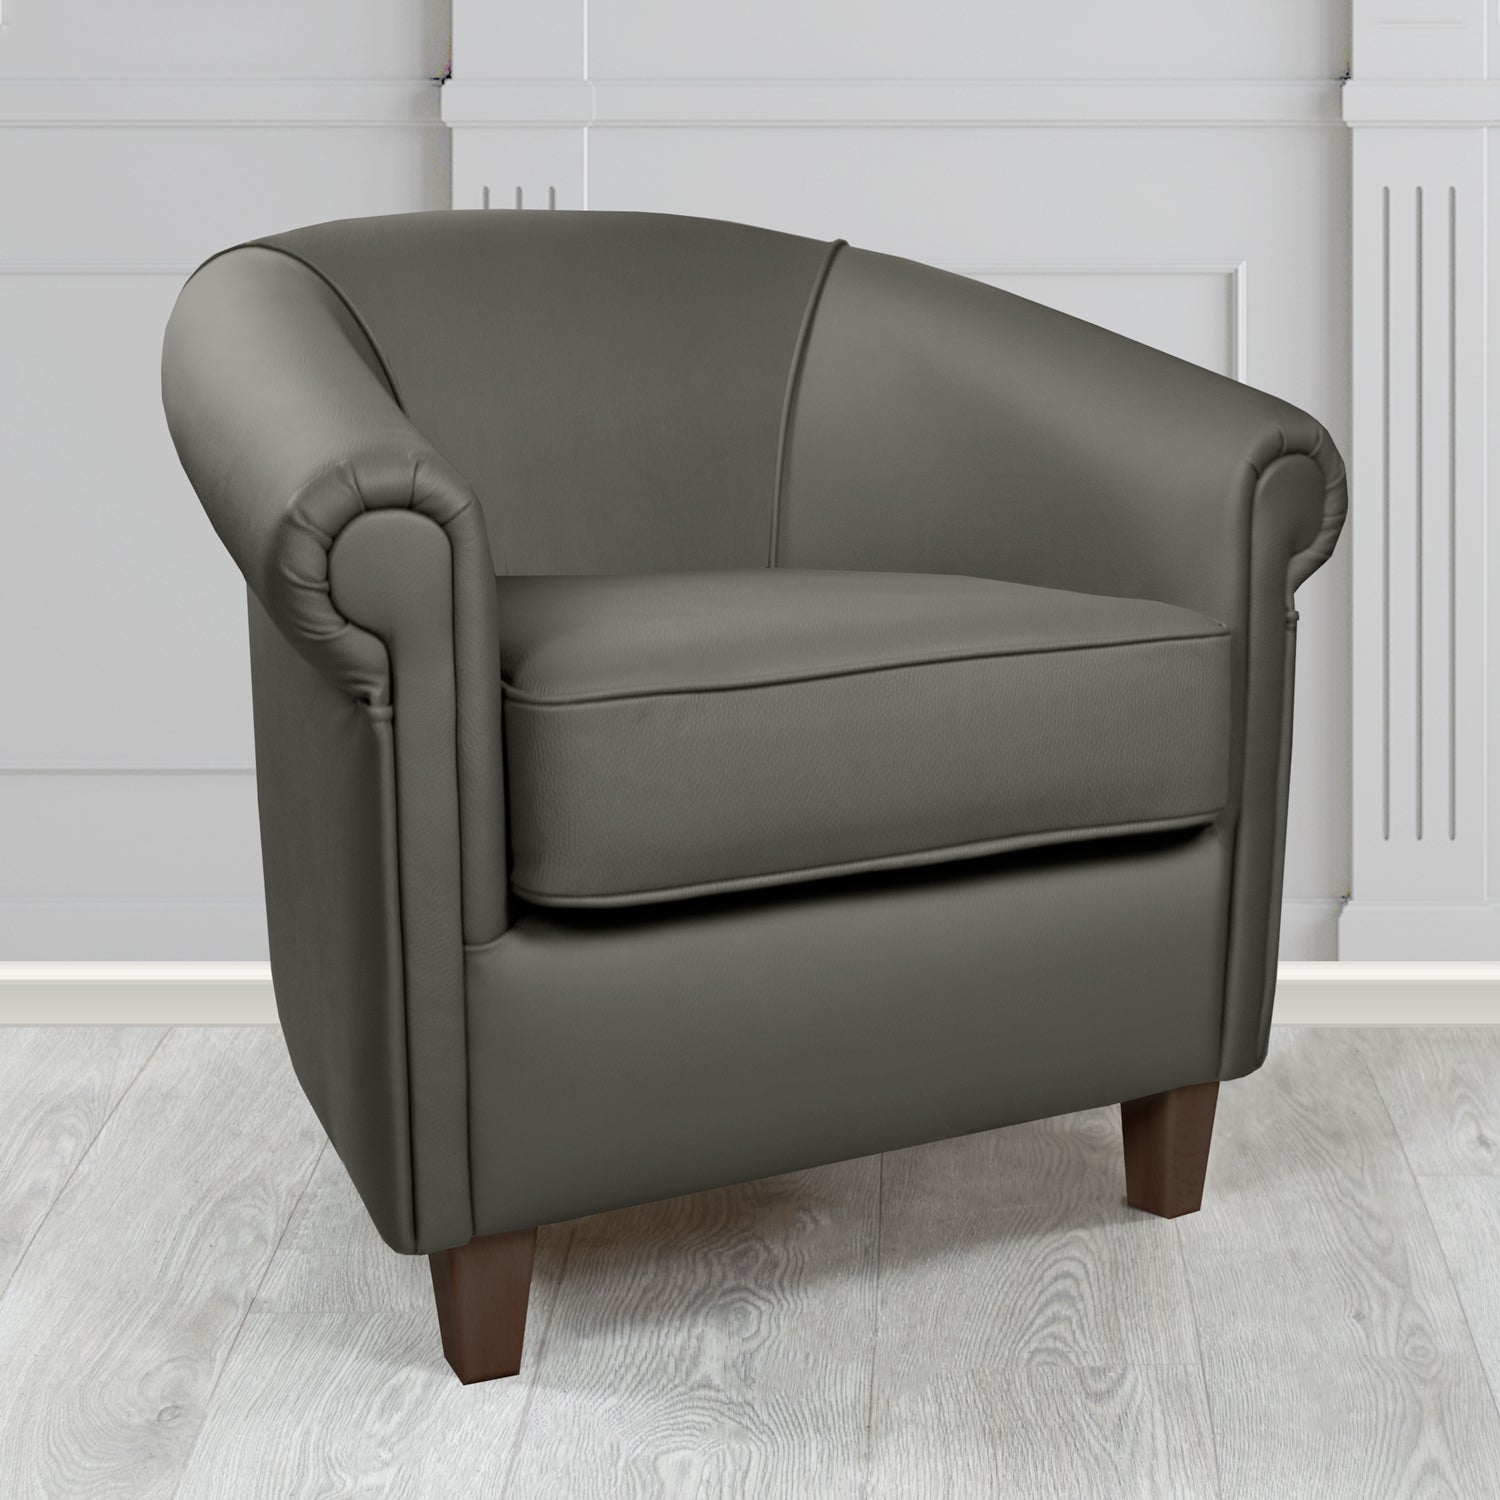 Siena Tub Chair in Crib 5 Shelly Steel Genuine Leather - The Tub Chair Shop